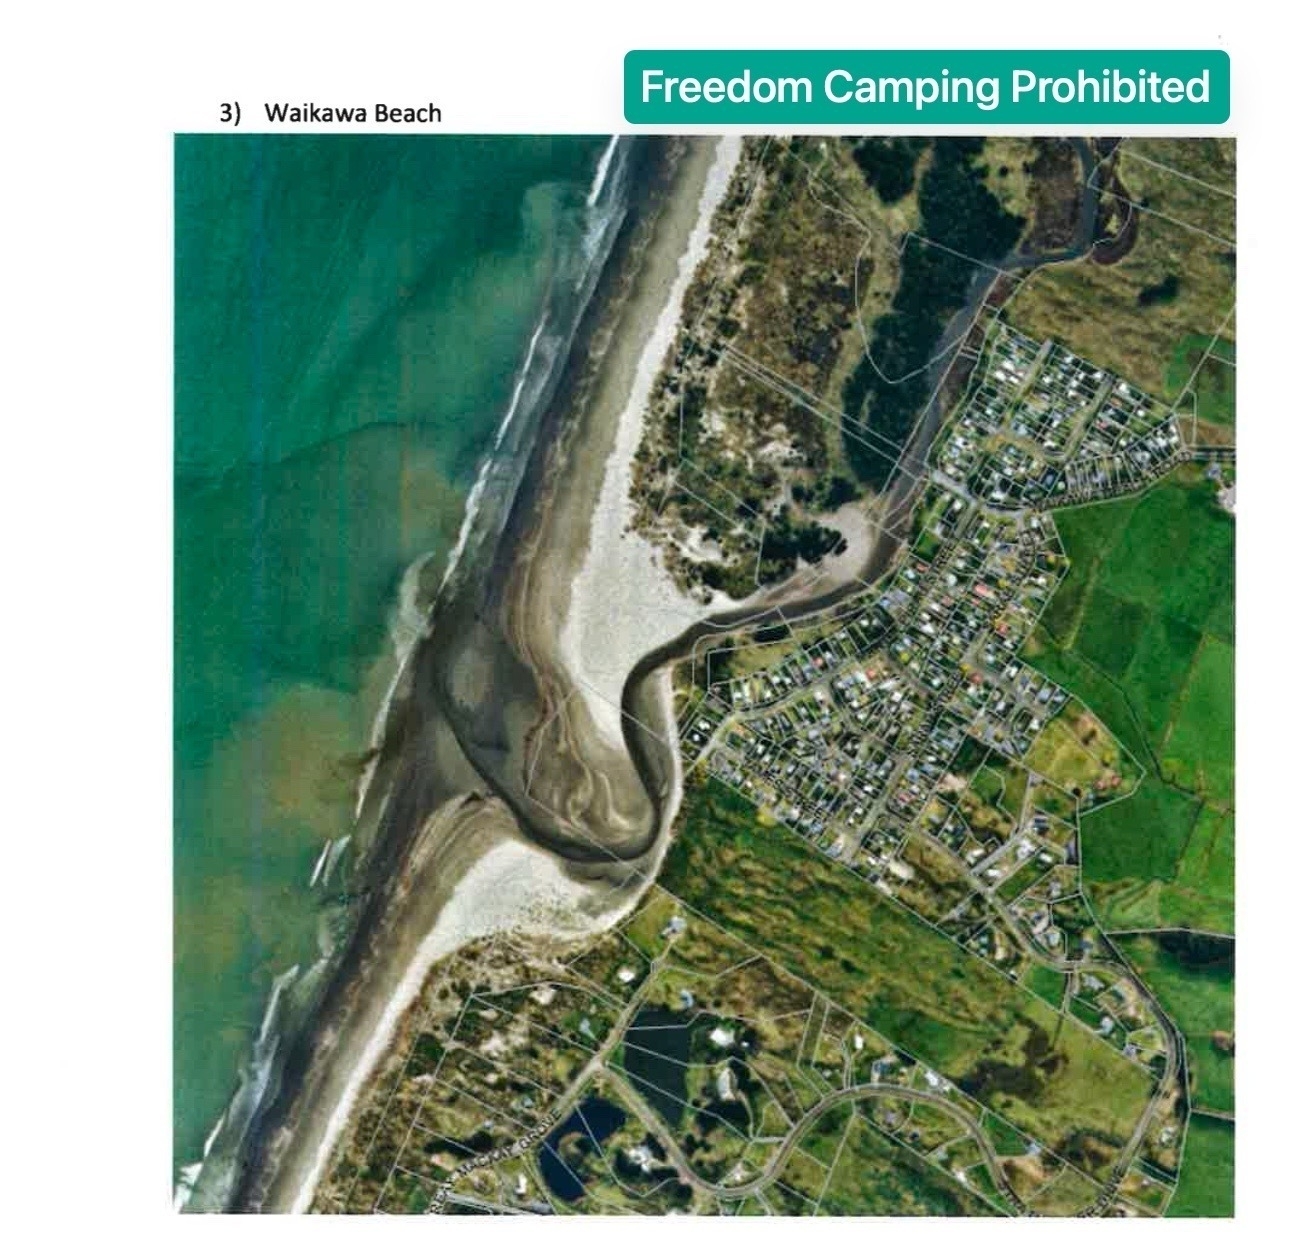 Freedom Camping prohibited at Waikawa Beach.